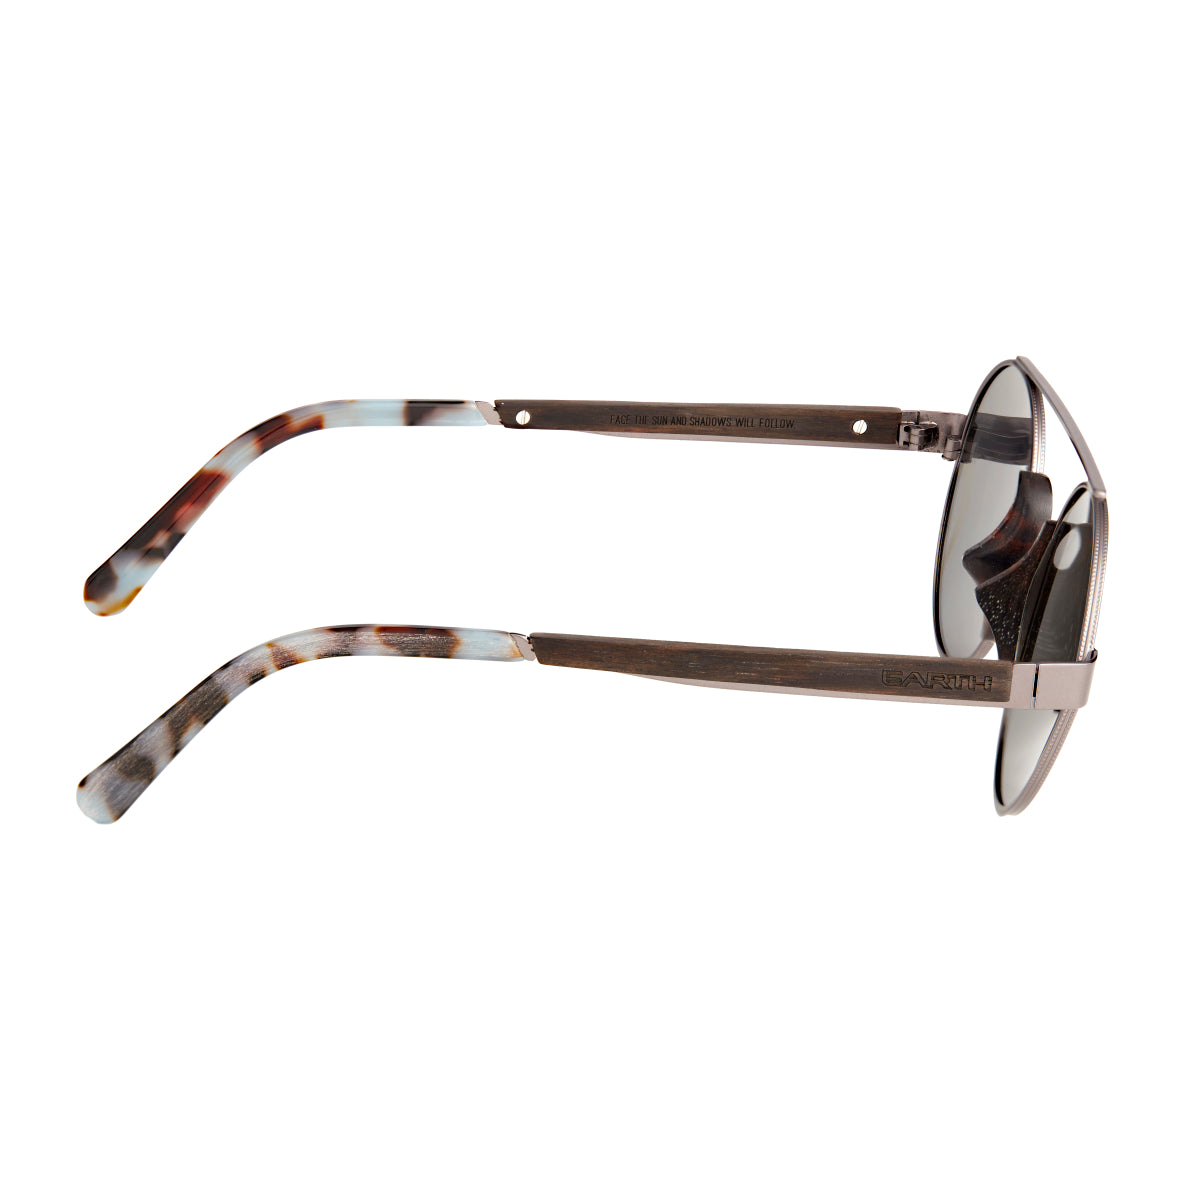 Earth Wood Anakena Polarized Sunglasses - Espresso/Silver - ESG038E